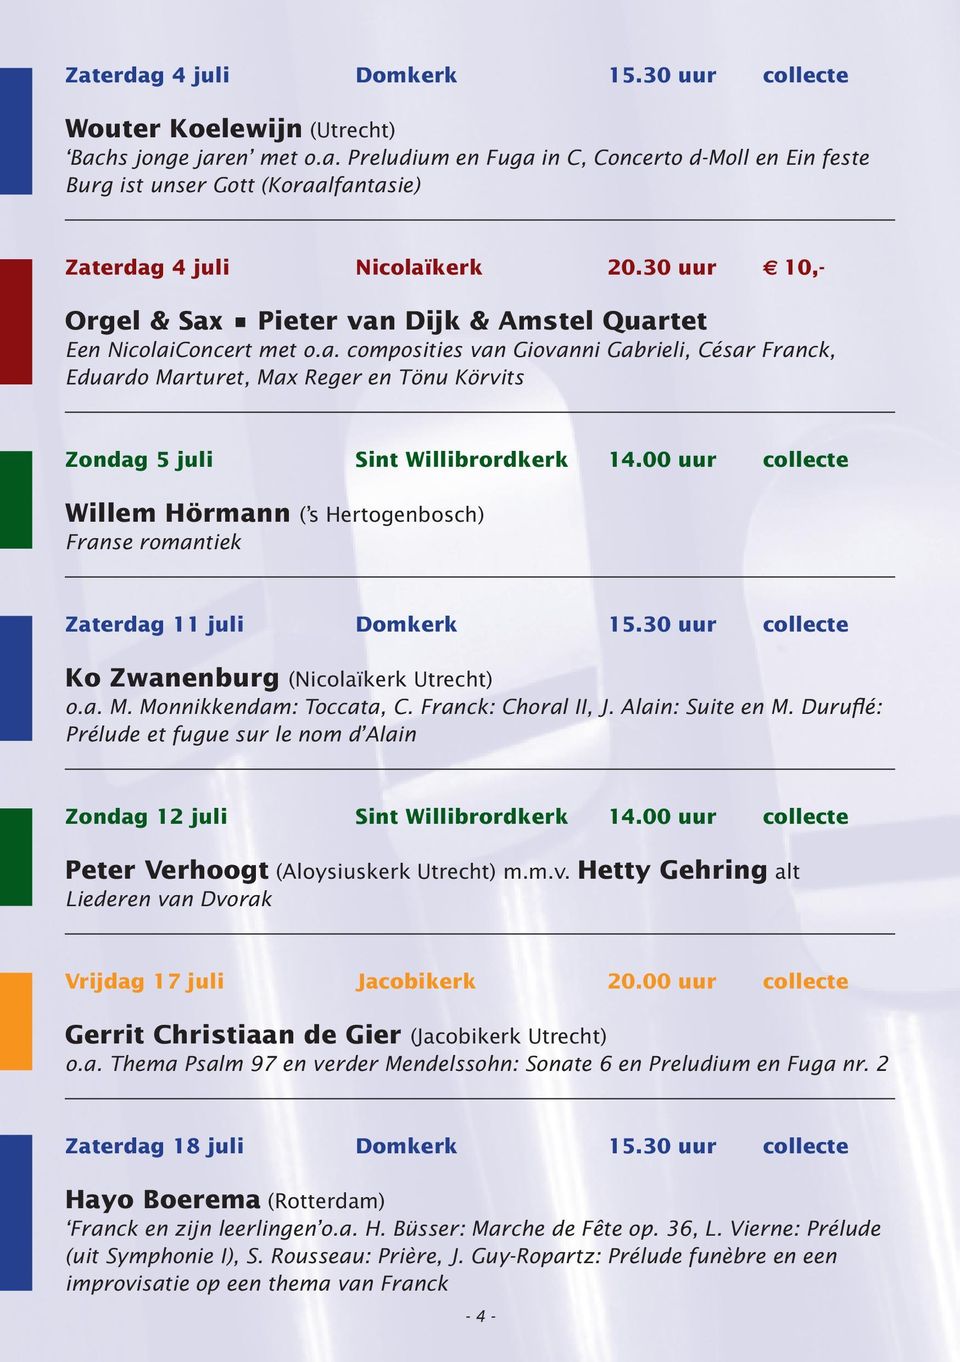 00 uur collecte Willem Hörmann ( s Hertogenbosch) Franse romantiek Zaterdag 11 juli Domkerk 15.30 uur collecte Ko Zwanenburg (Nicolaïkerk Utrecht) o.a. M. Monnikkendam: Toccata, C.